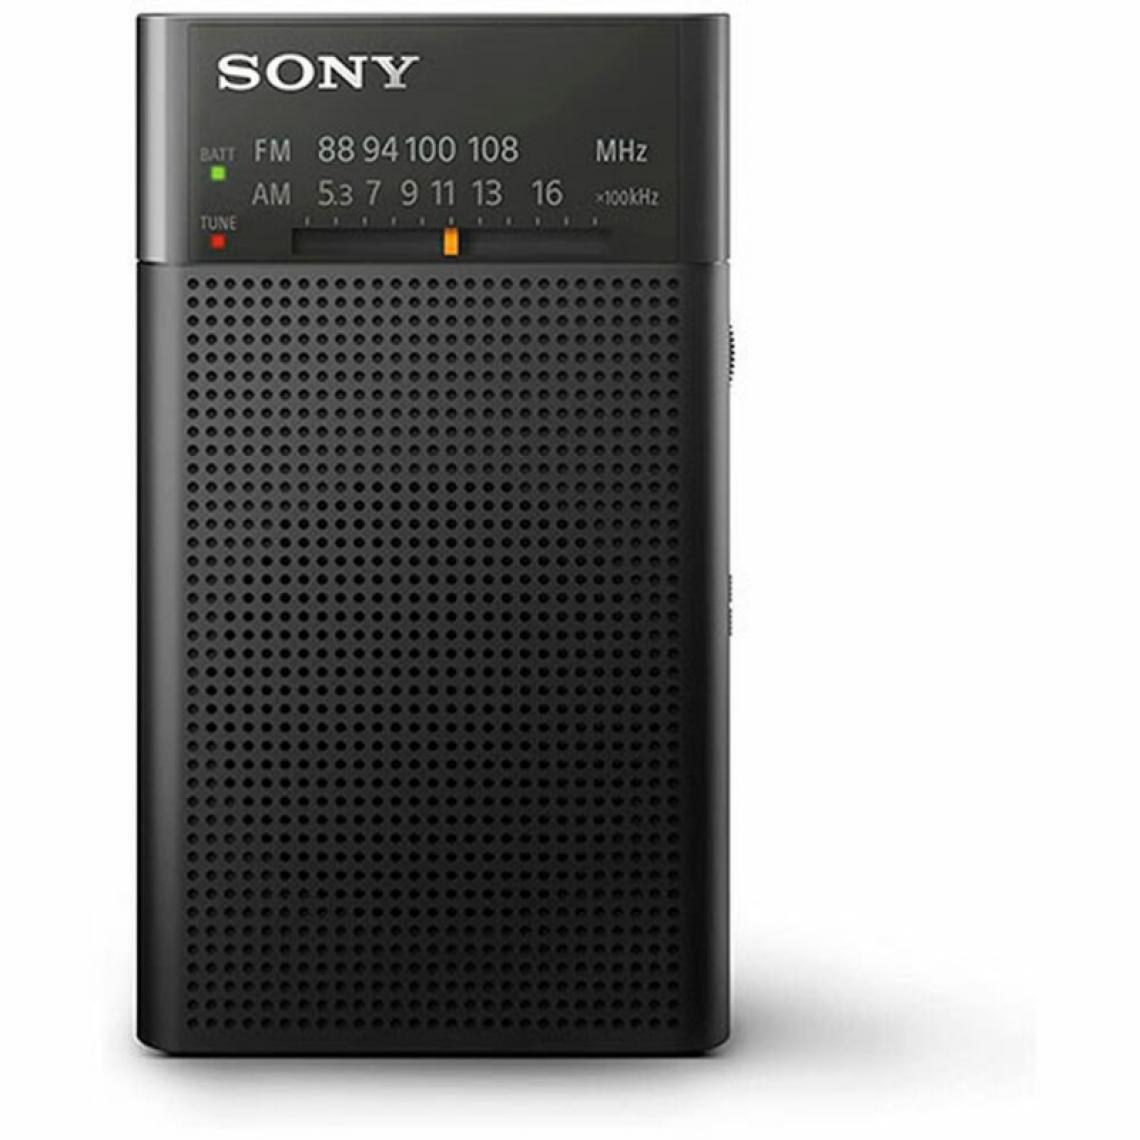 Sony - Radio transistor Sony 100 mW - Radio